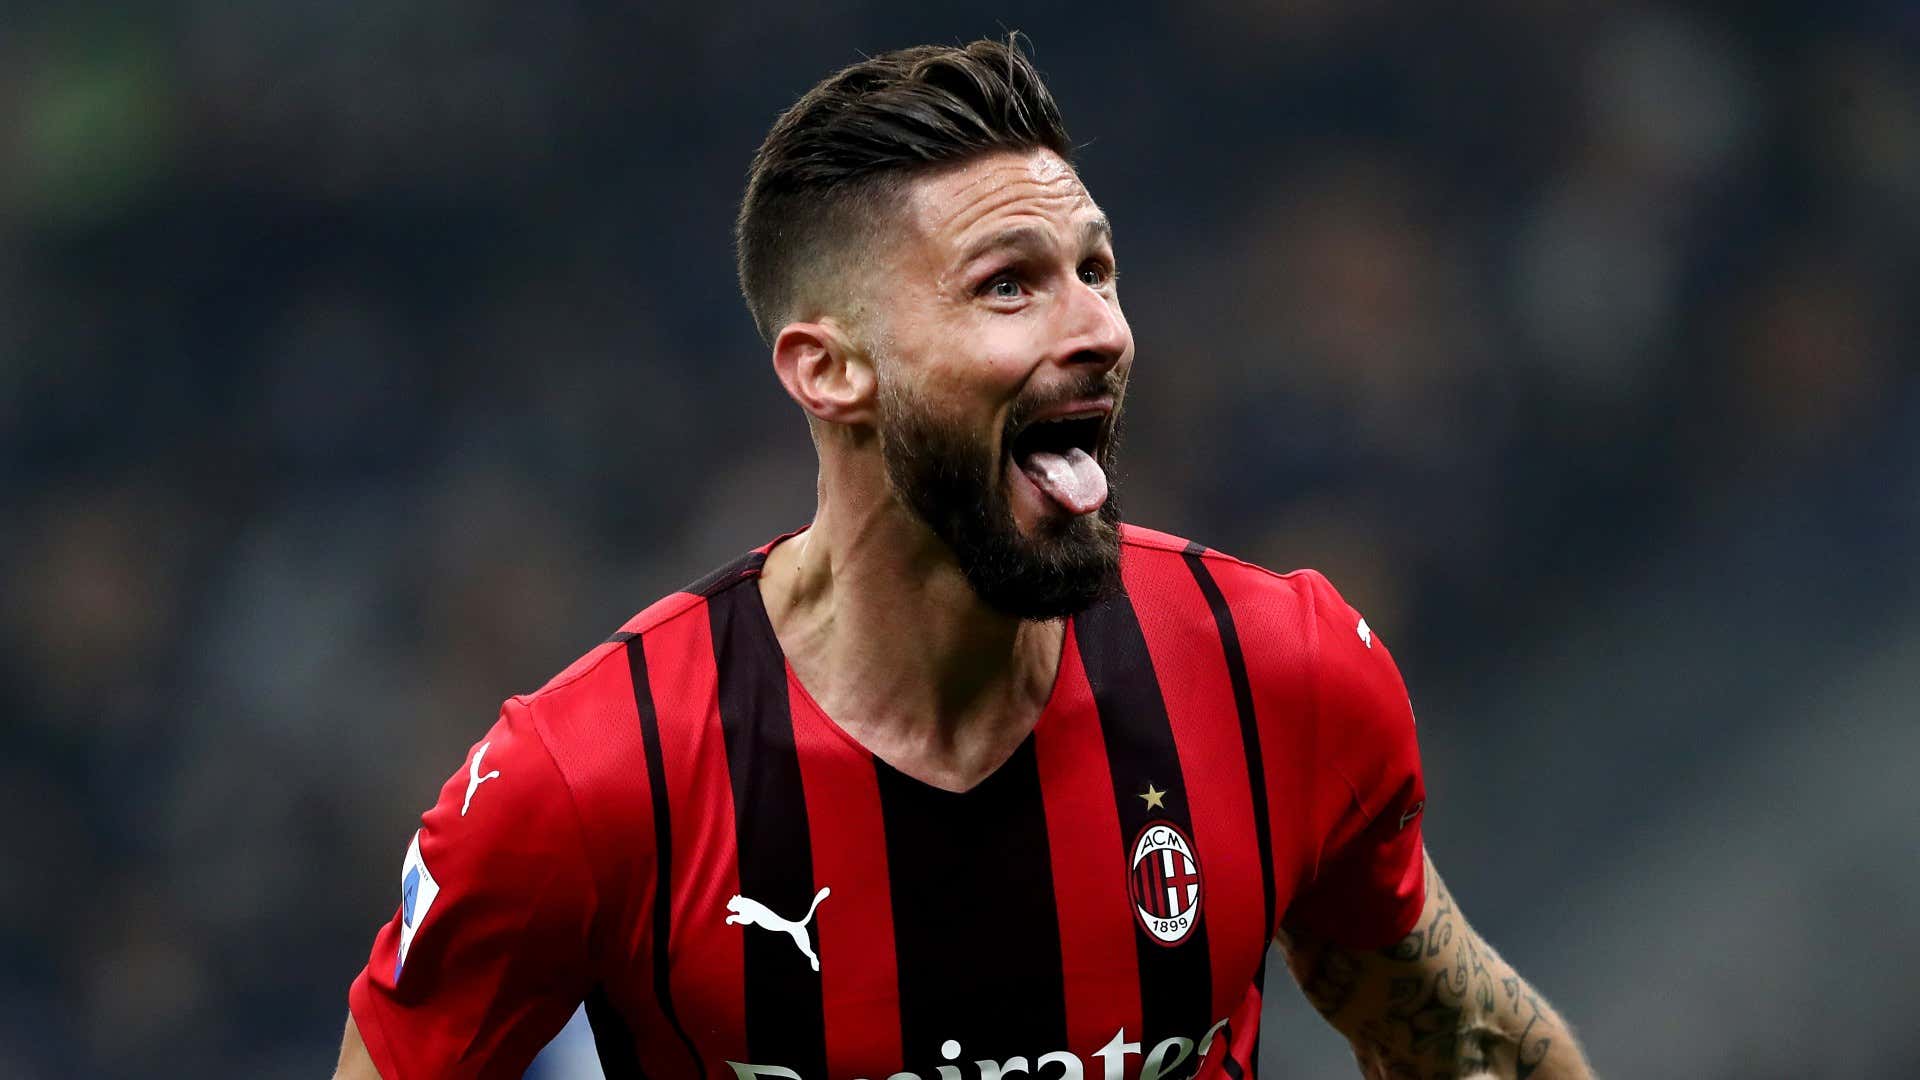 Watch: AC Milan star Giroud hits dramatic late double vs Inter to win Milan derby | Goal.com